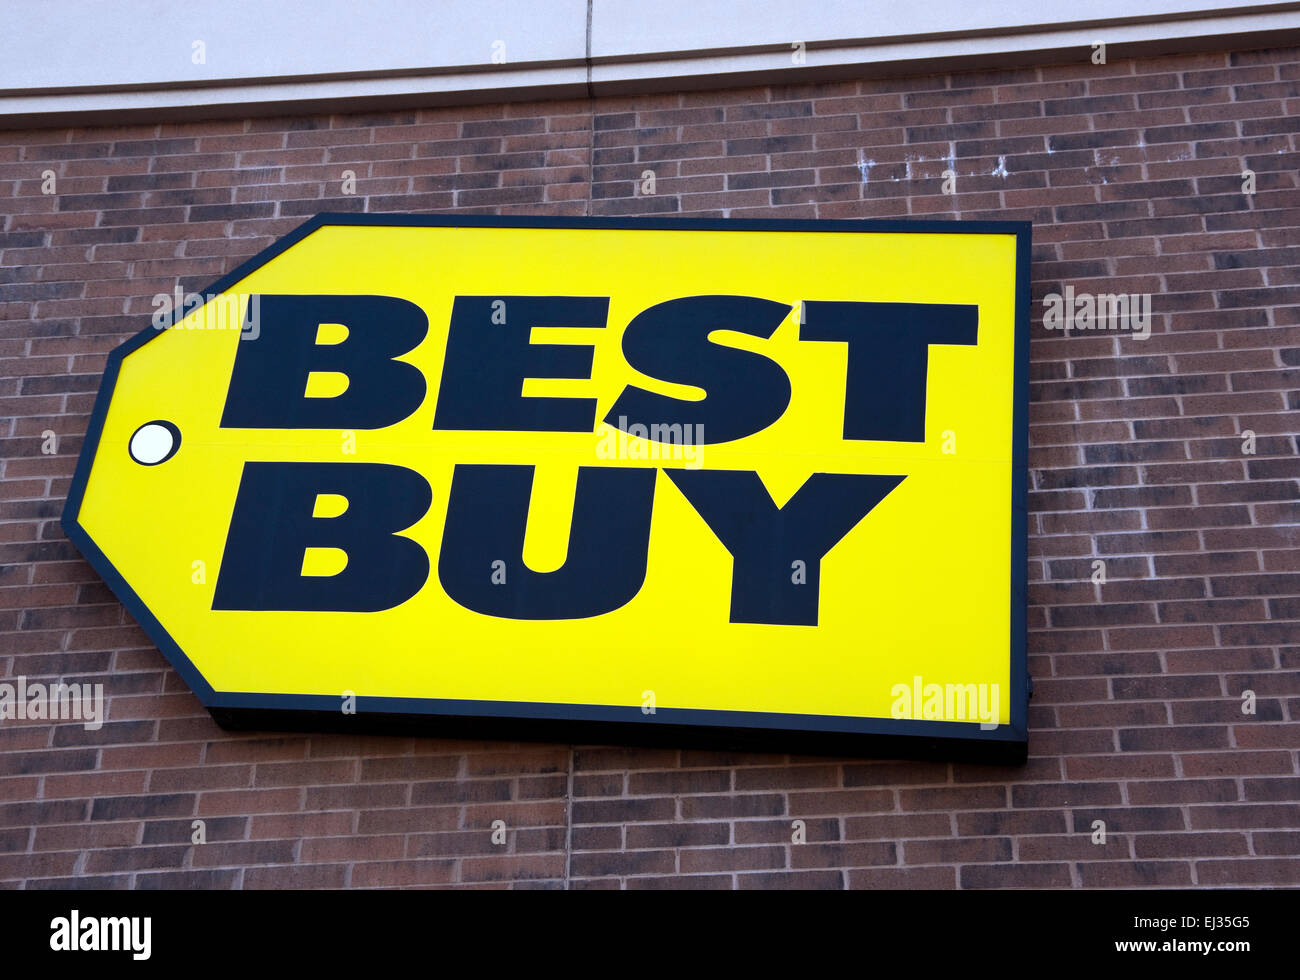 Best Buy, electronics retailer logo sign on brick building Stock Photo